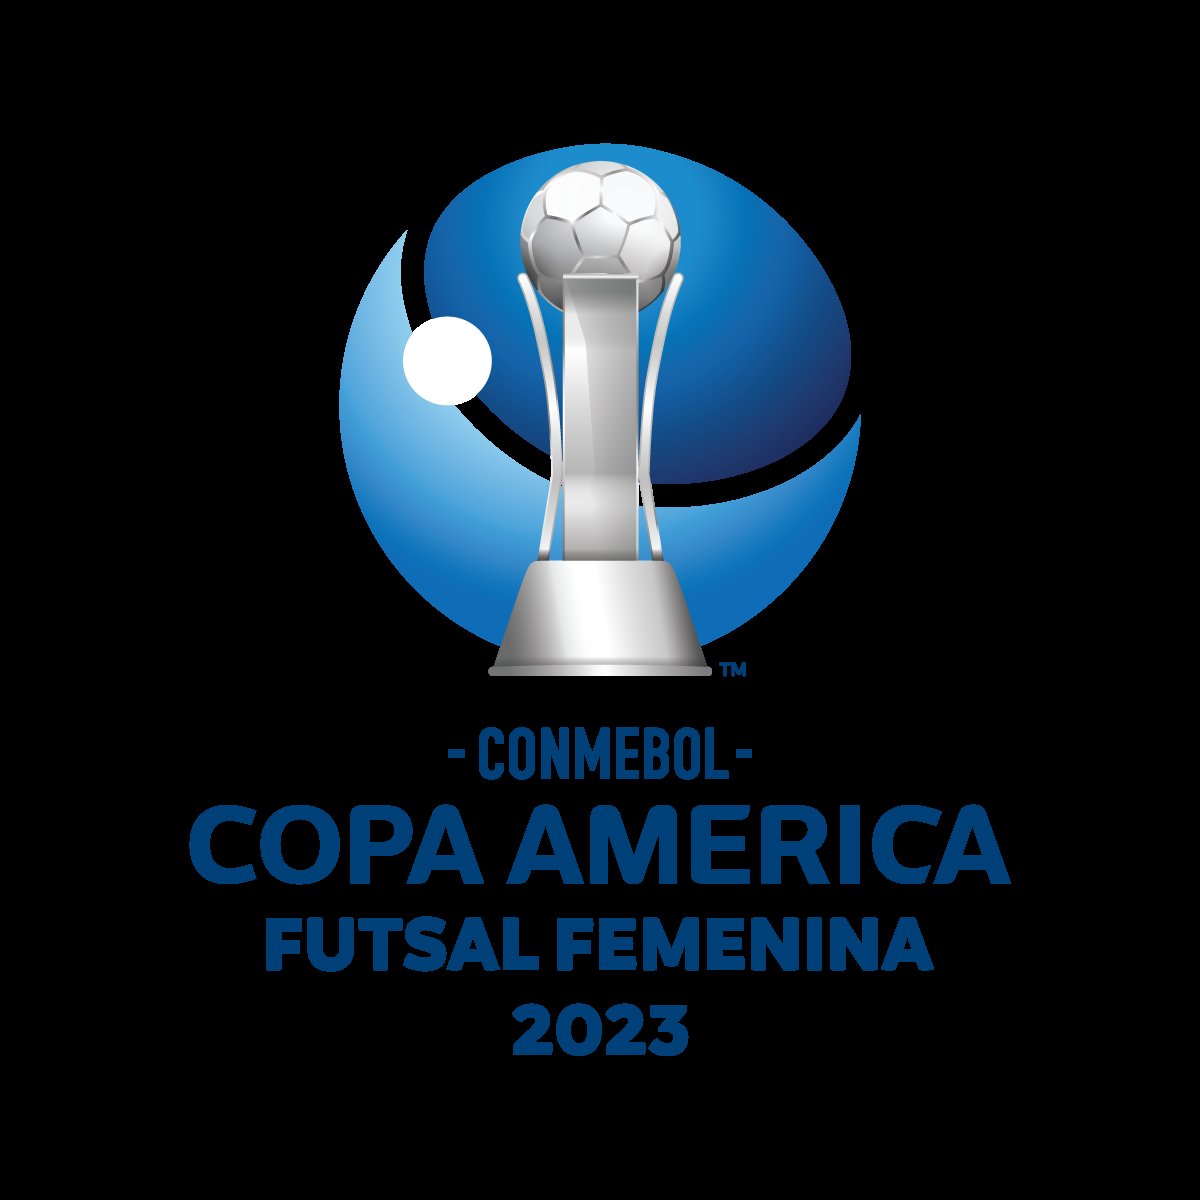 VIII Copa América Femenina Futsal #BuenosAires2023 
Microestadio Malvinas
24SEP- 1OCT